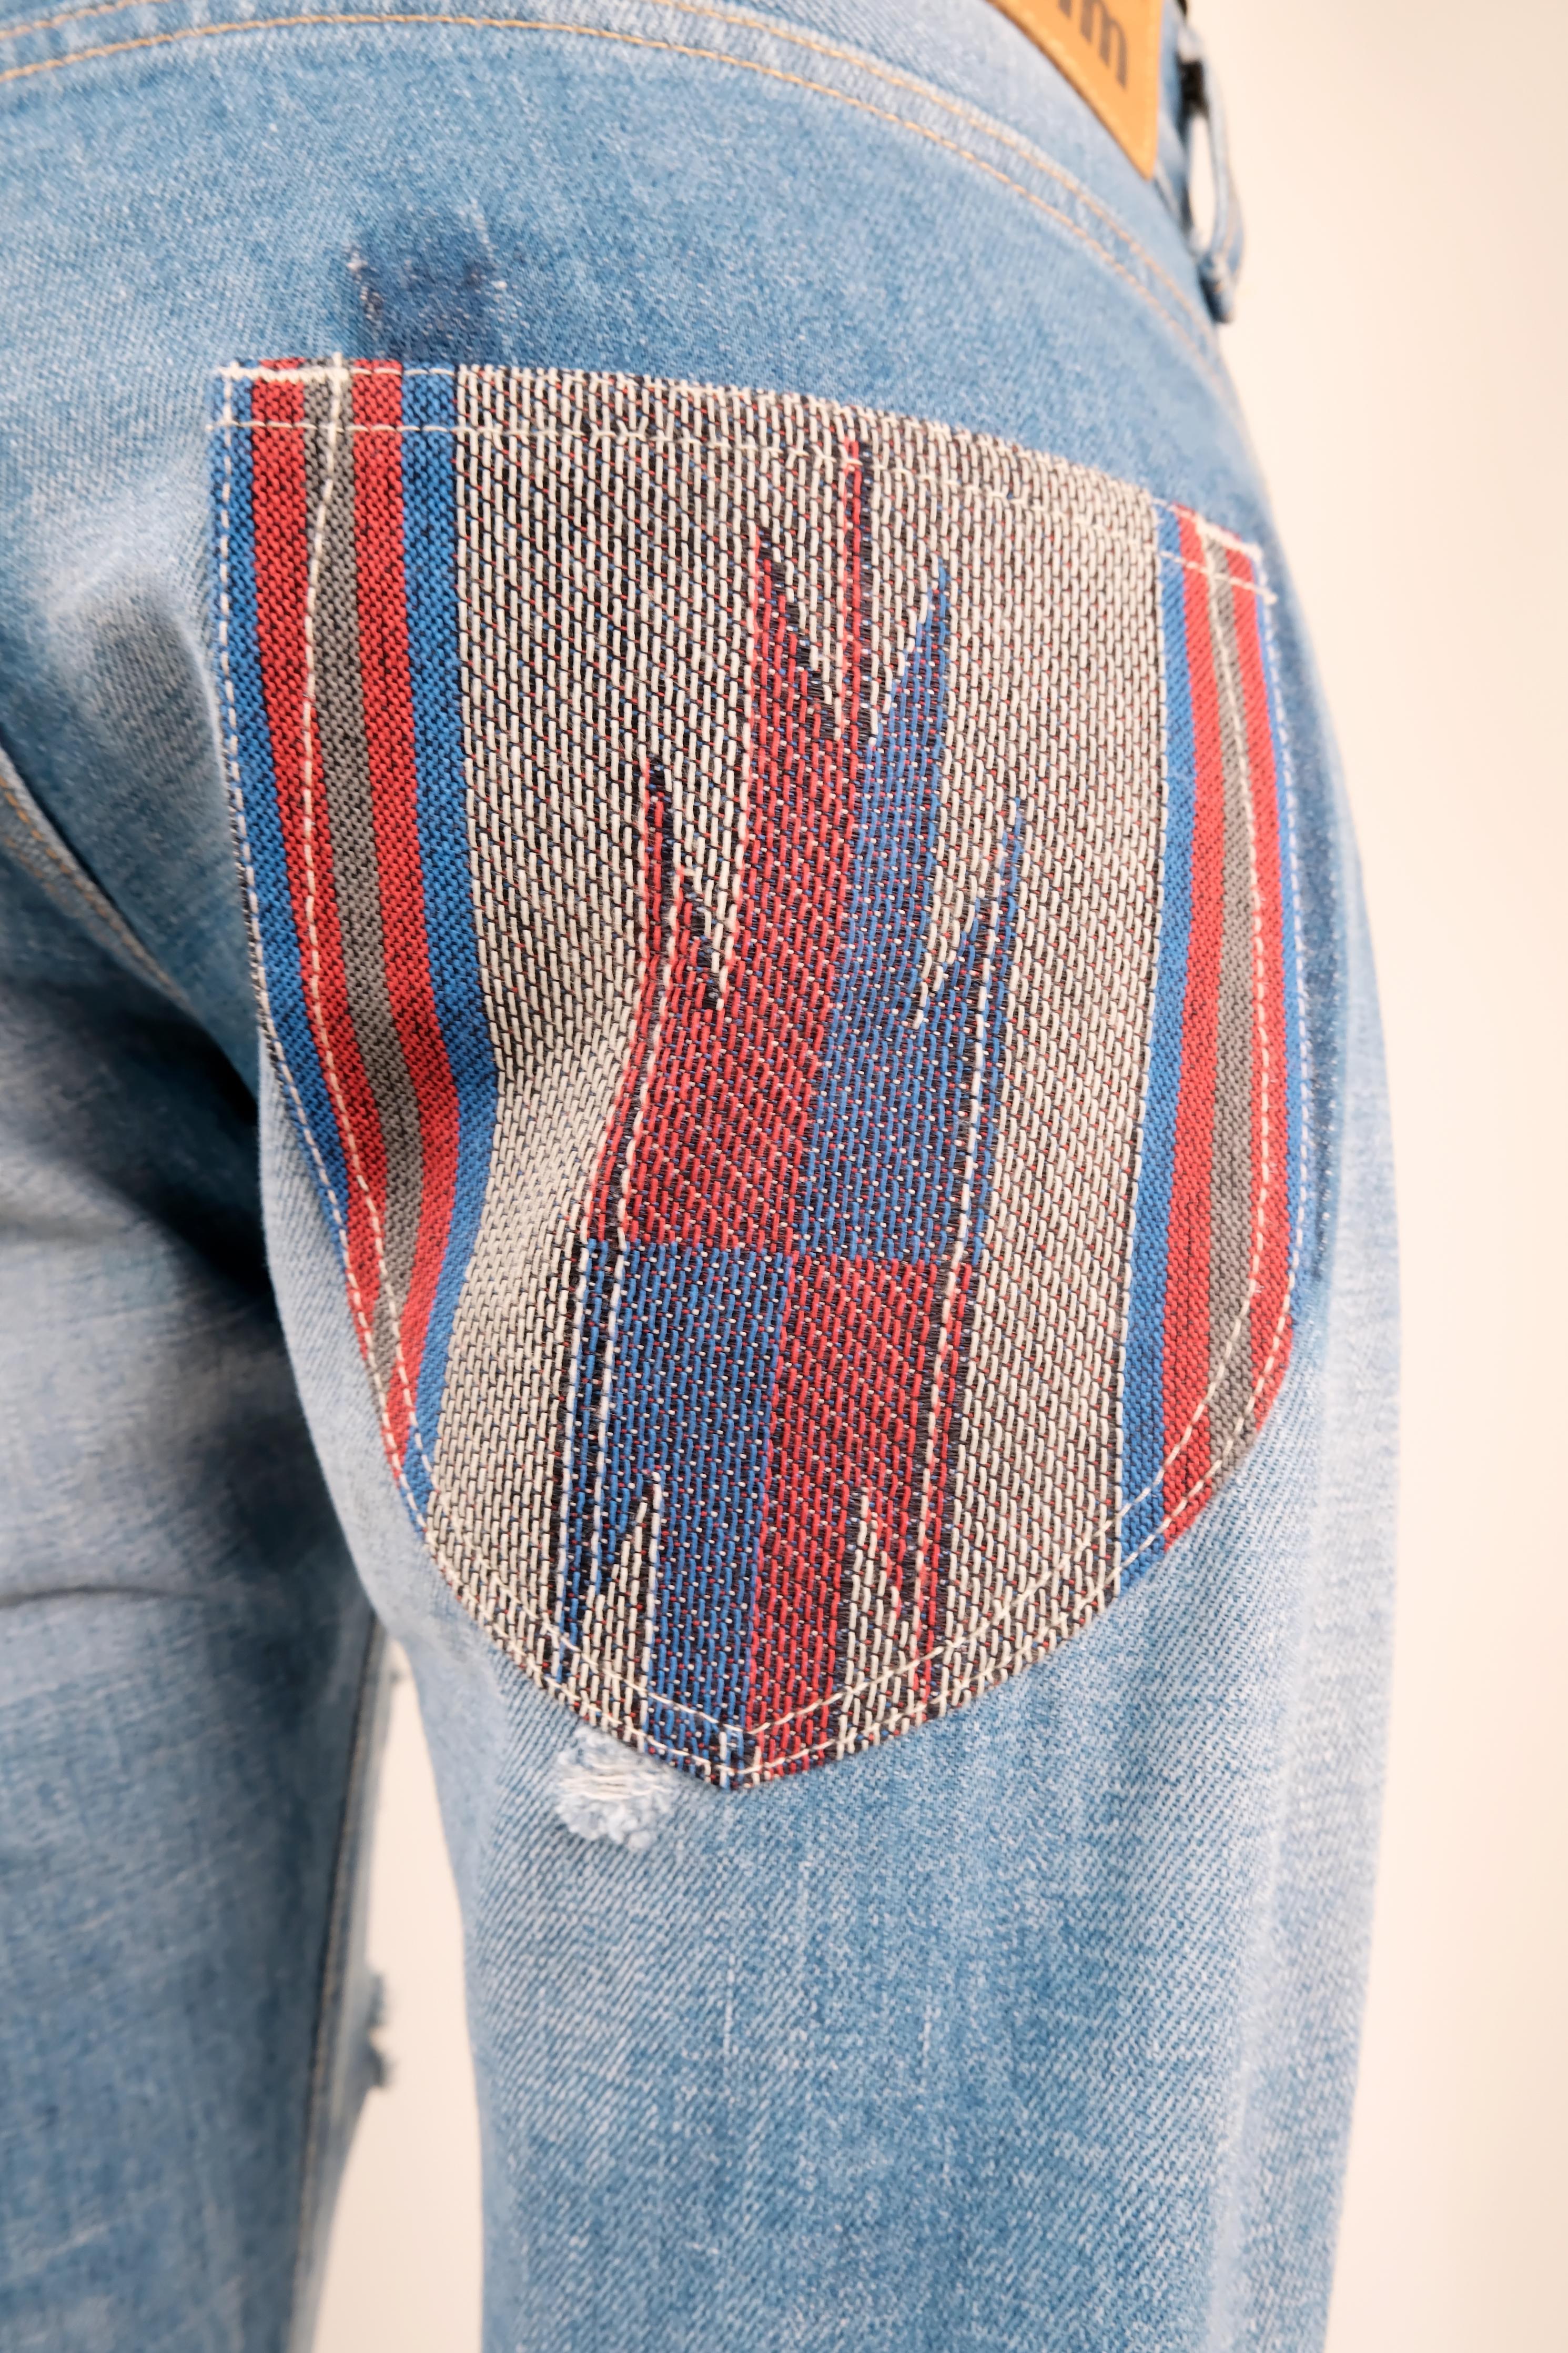 JUNYA WATANABE COMME DES GARÇONS Patchwork Distressed Fringe Jeans SS14 Runway For Sale 4